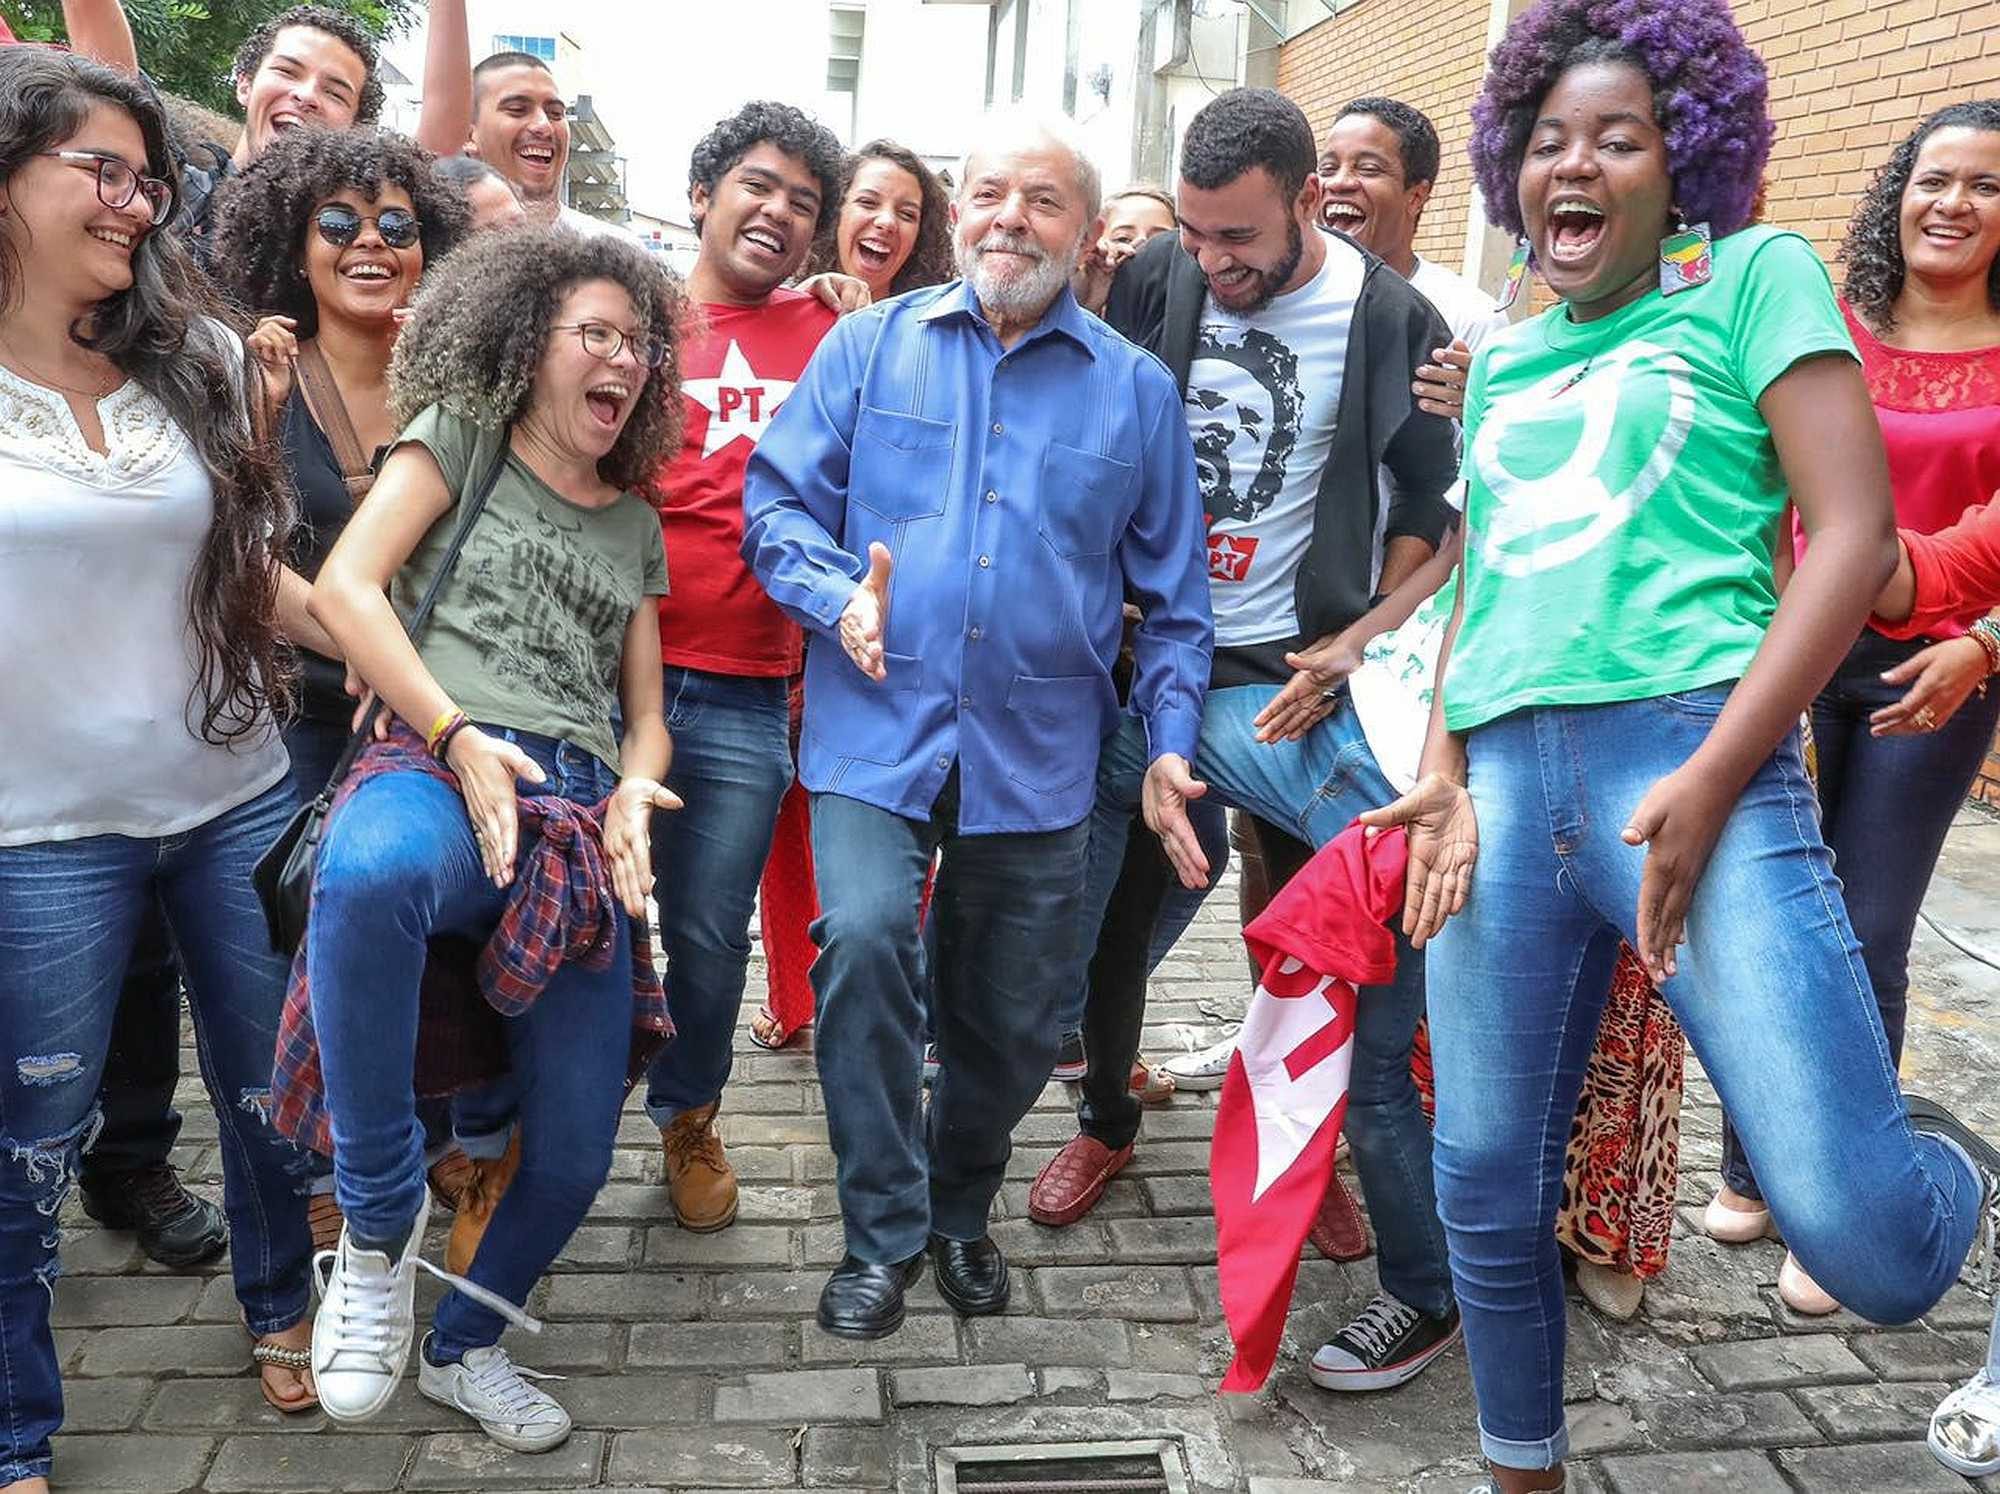 Lula dancing with fans - Ricardo Stuckert/Instituto Lula